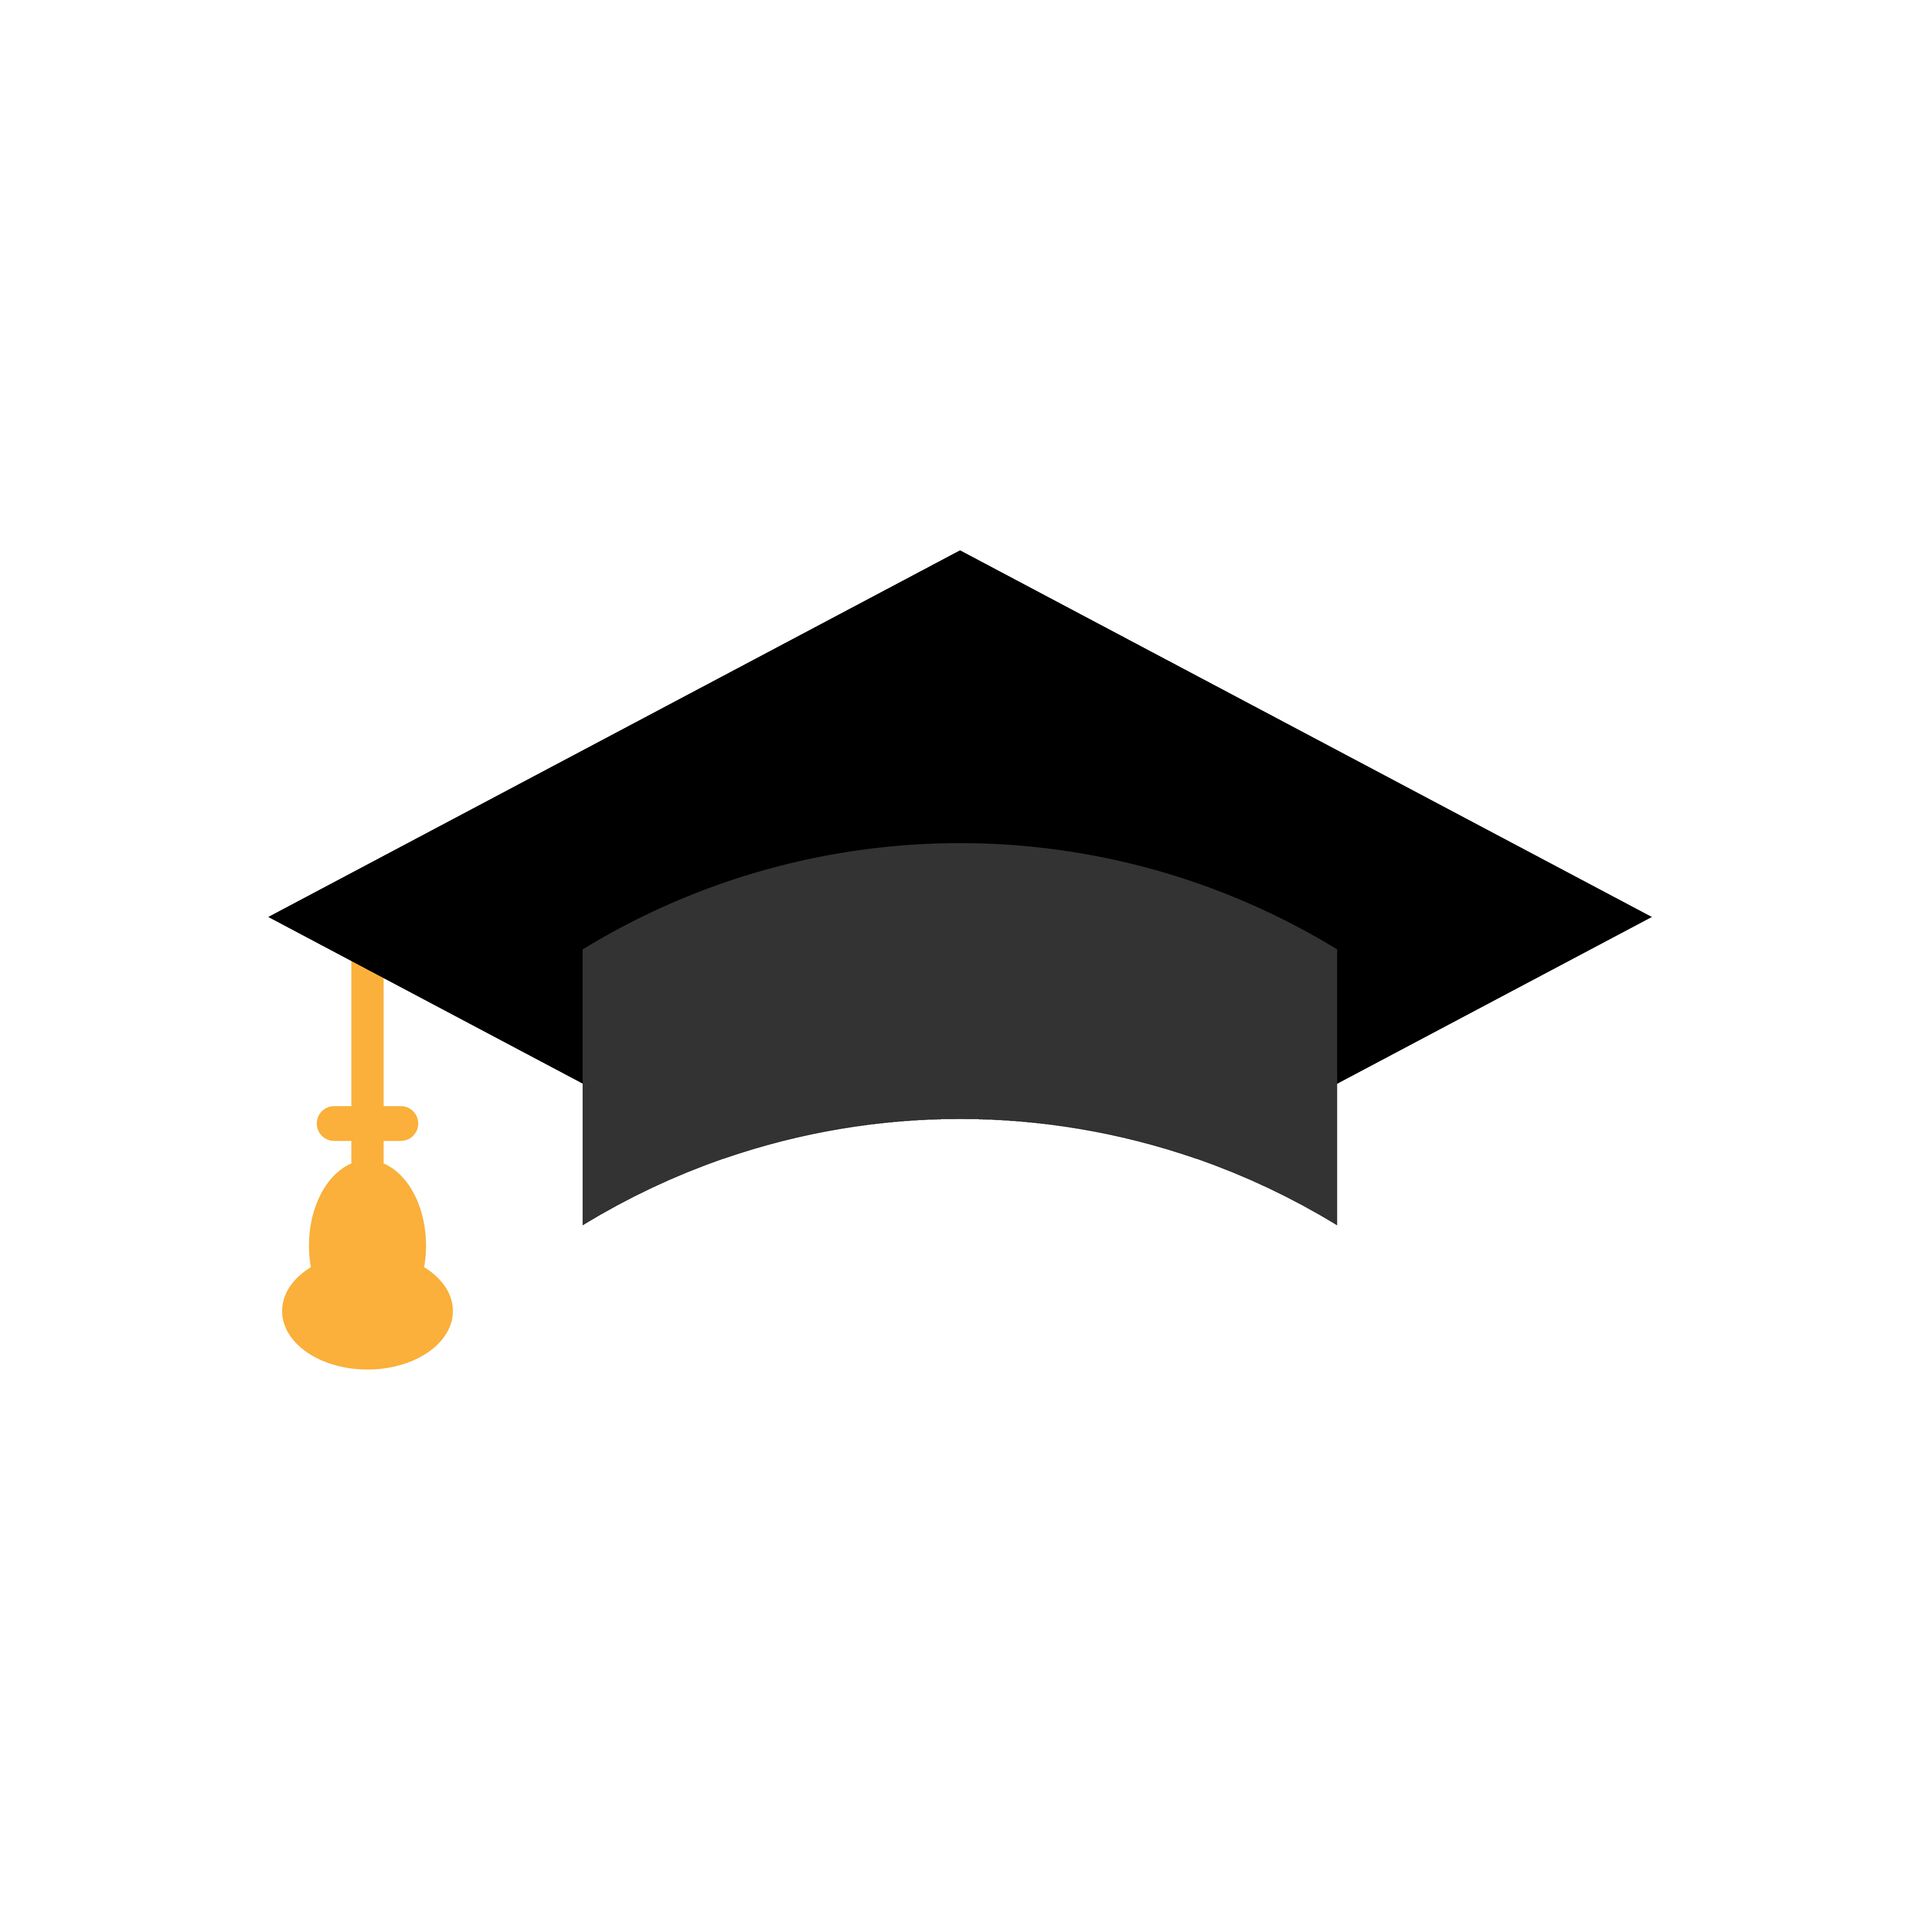 A graduation hat